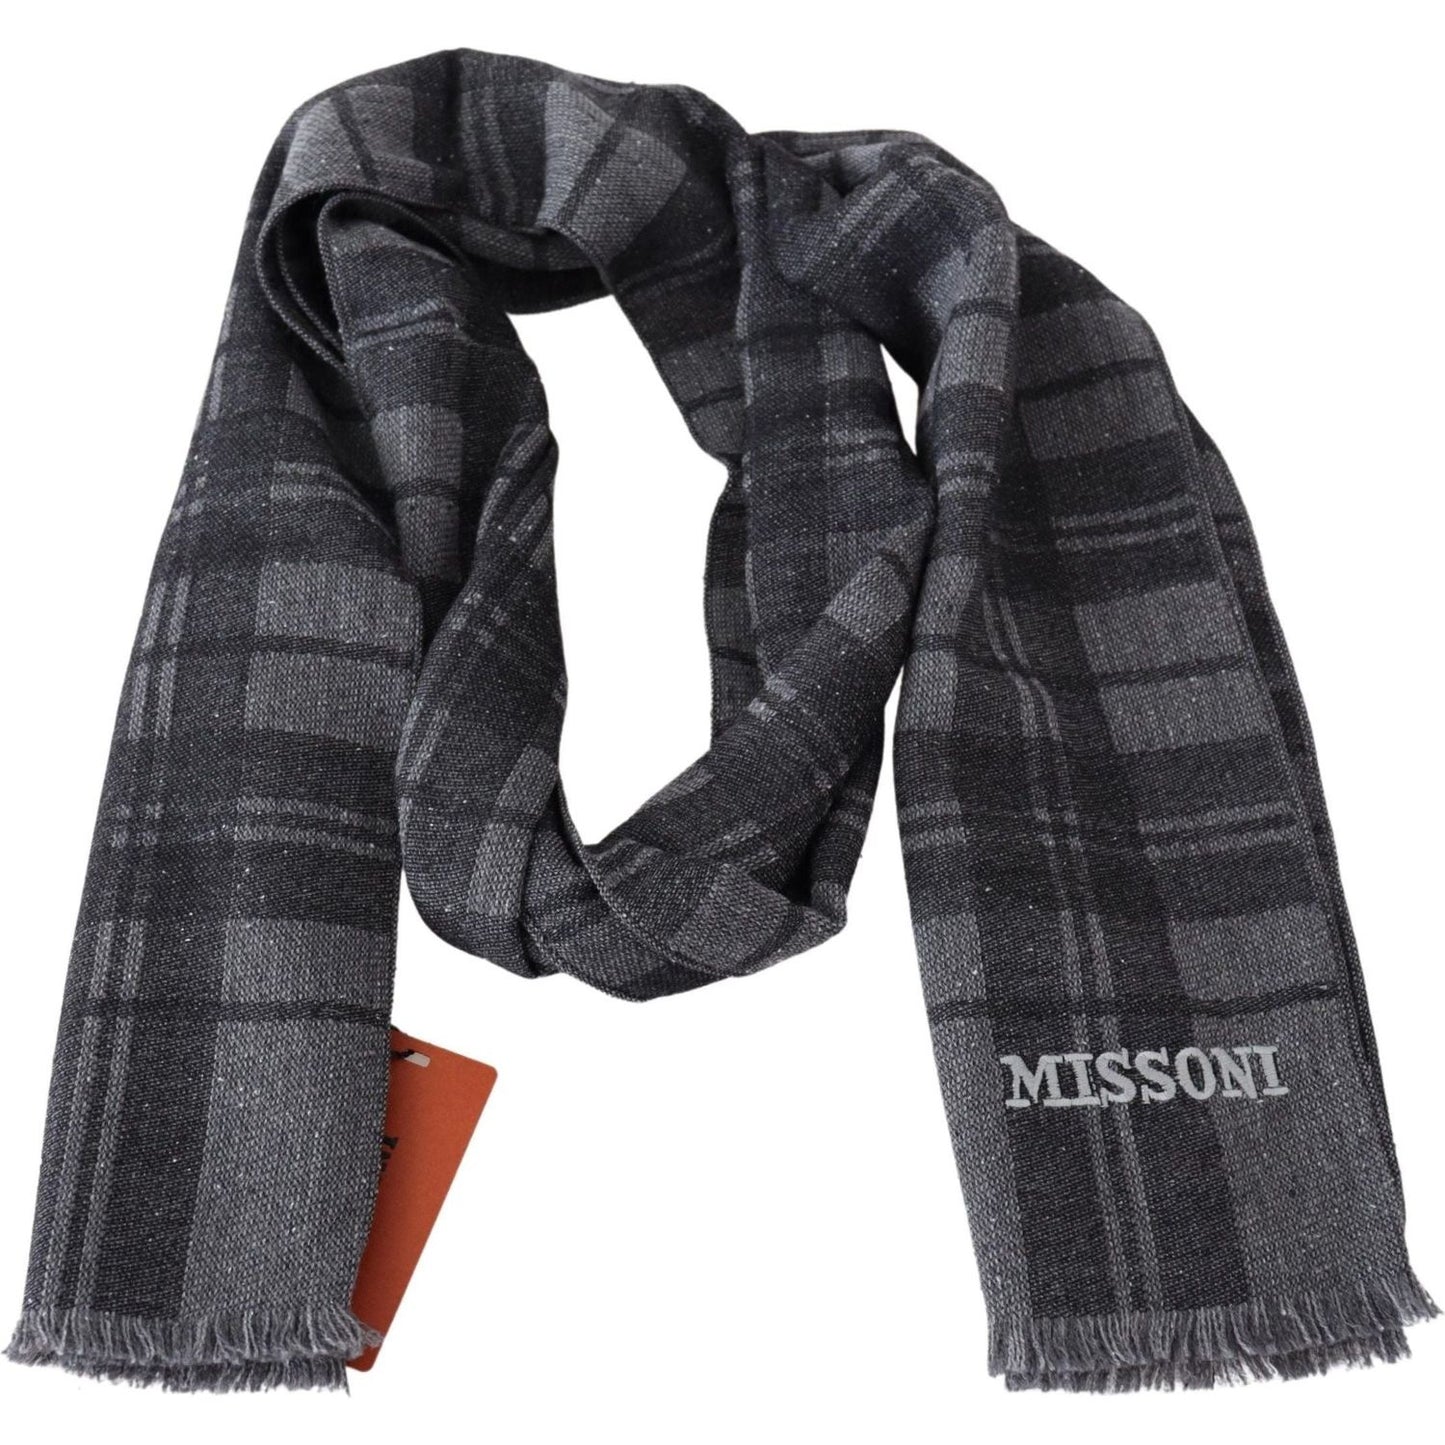 Missoni Elegant Unisex Plaid Wool Scarf with Logo Embroidery gray-wool-knit-plaid-unisex-neck-wrap-shawl-scarf